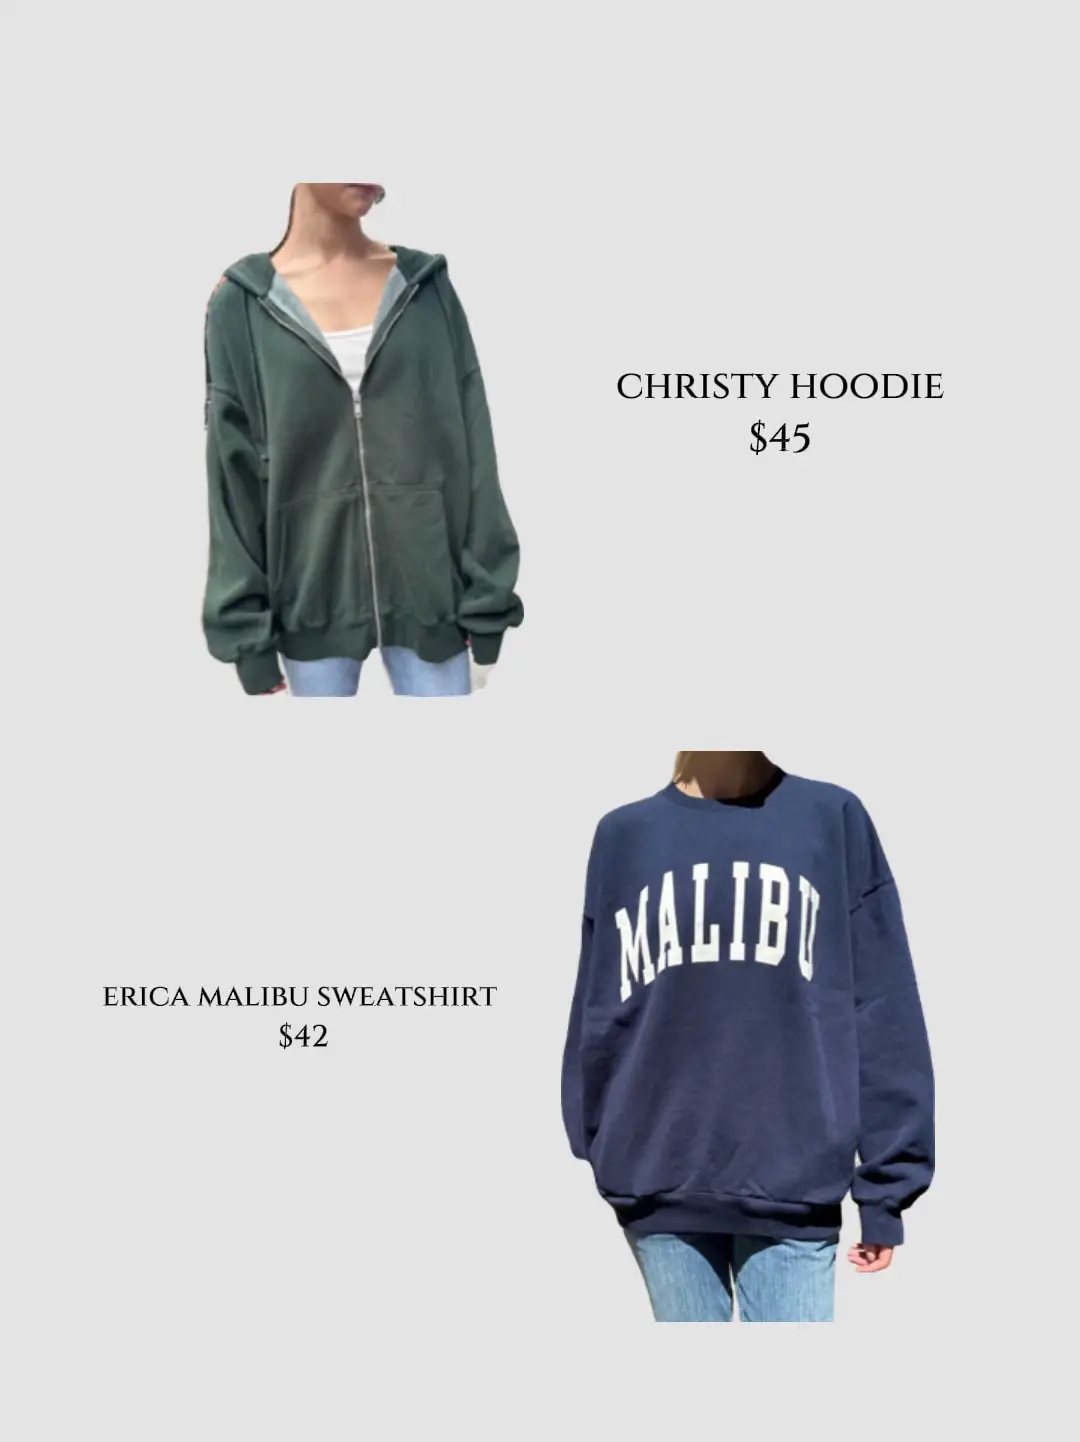 BRANDY MELVILLE christy hoodie  Brandy melville christy hoodie, Christy  hoodie, Dream clothes